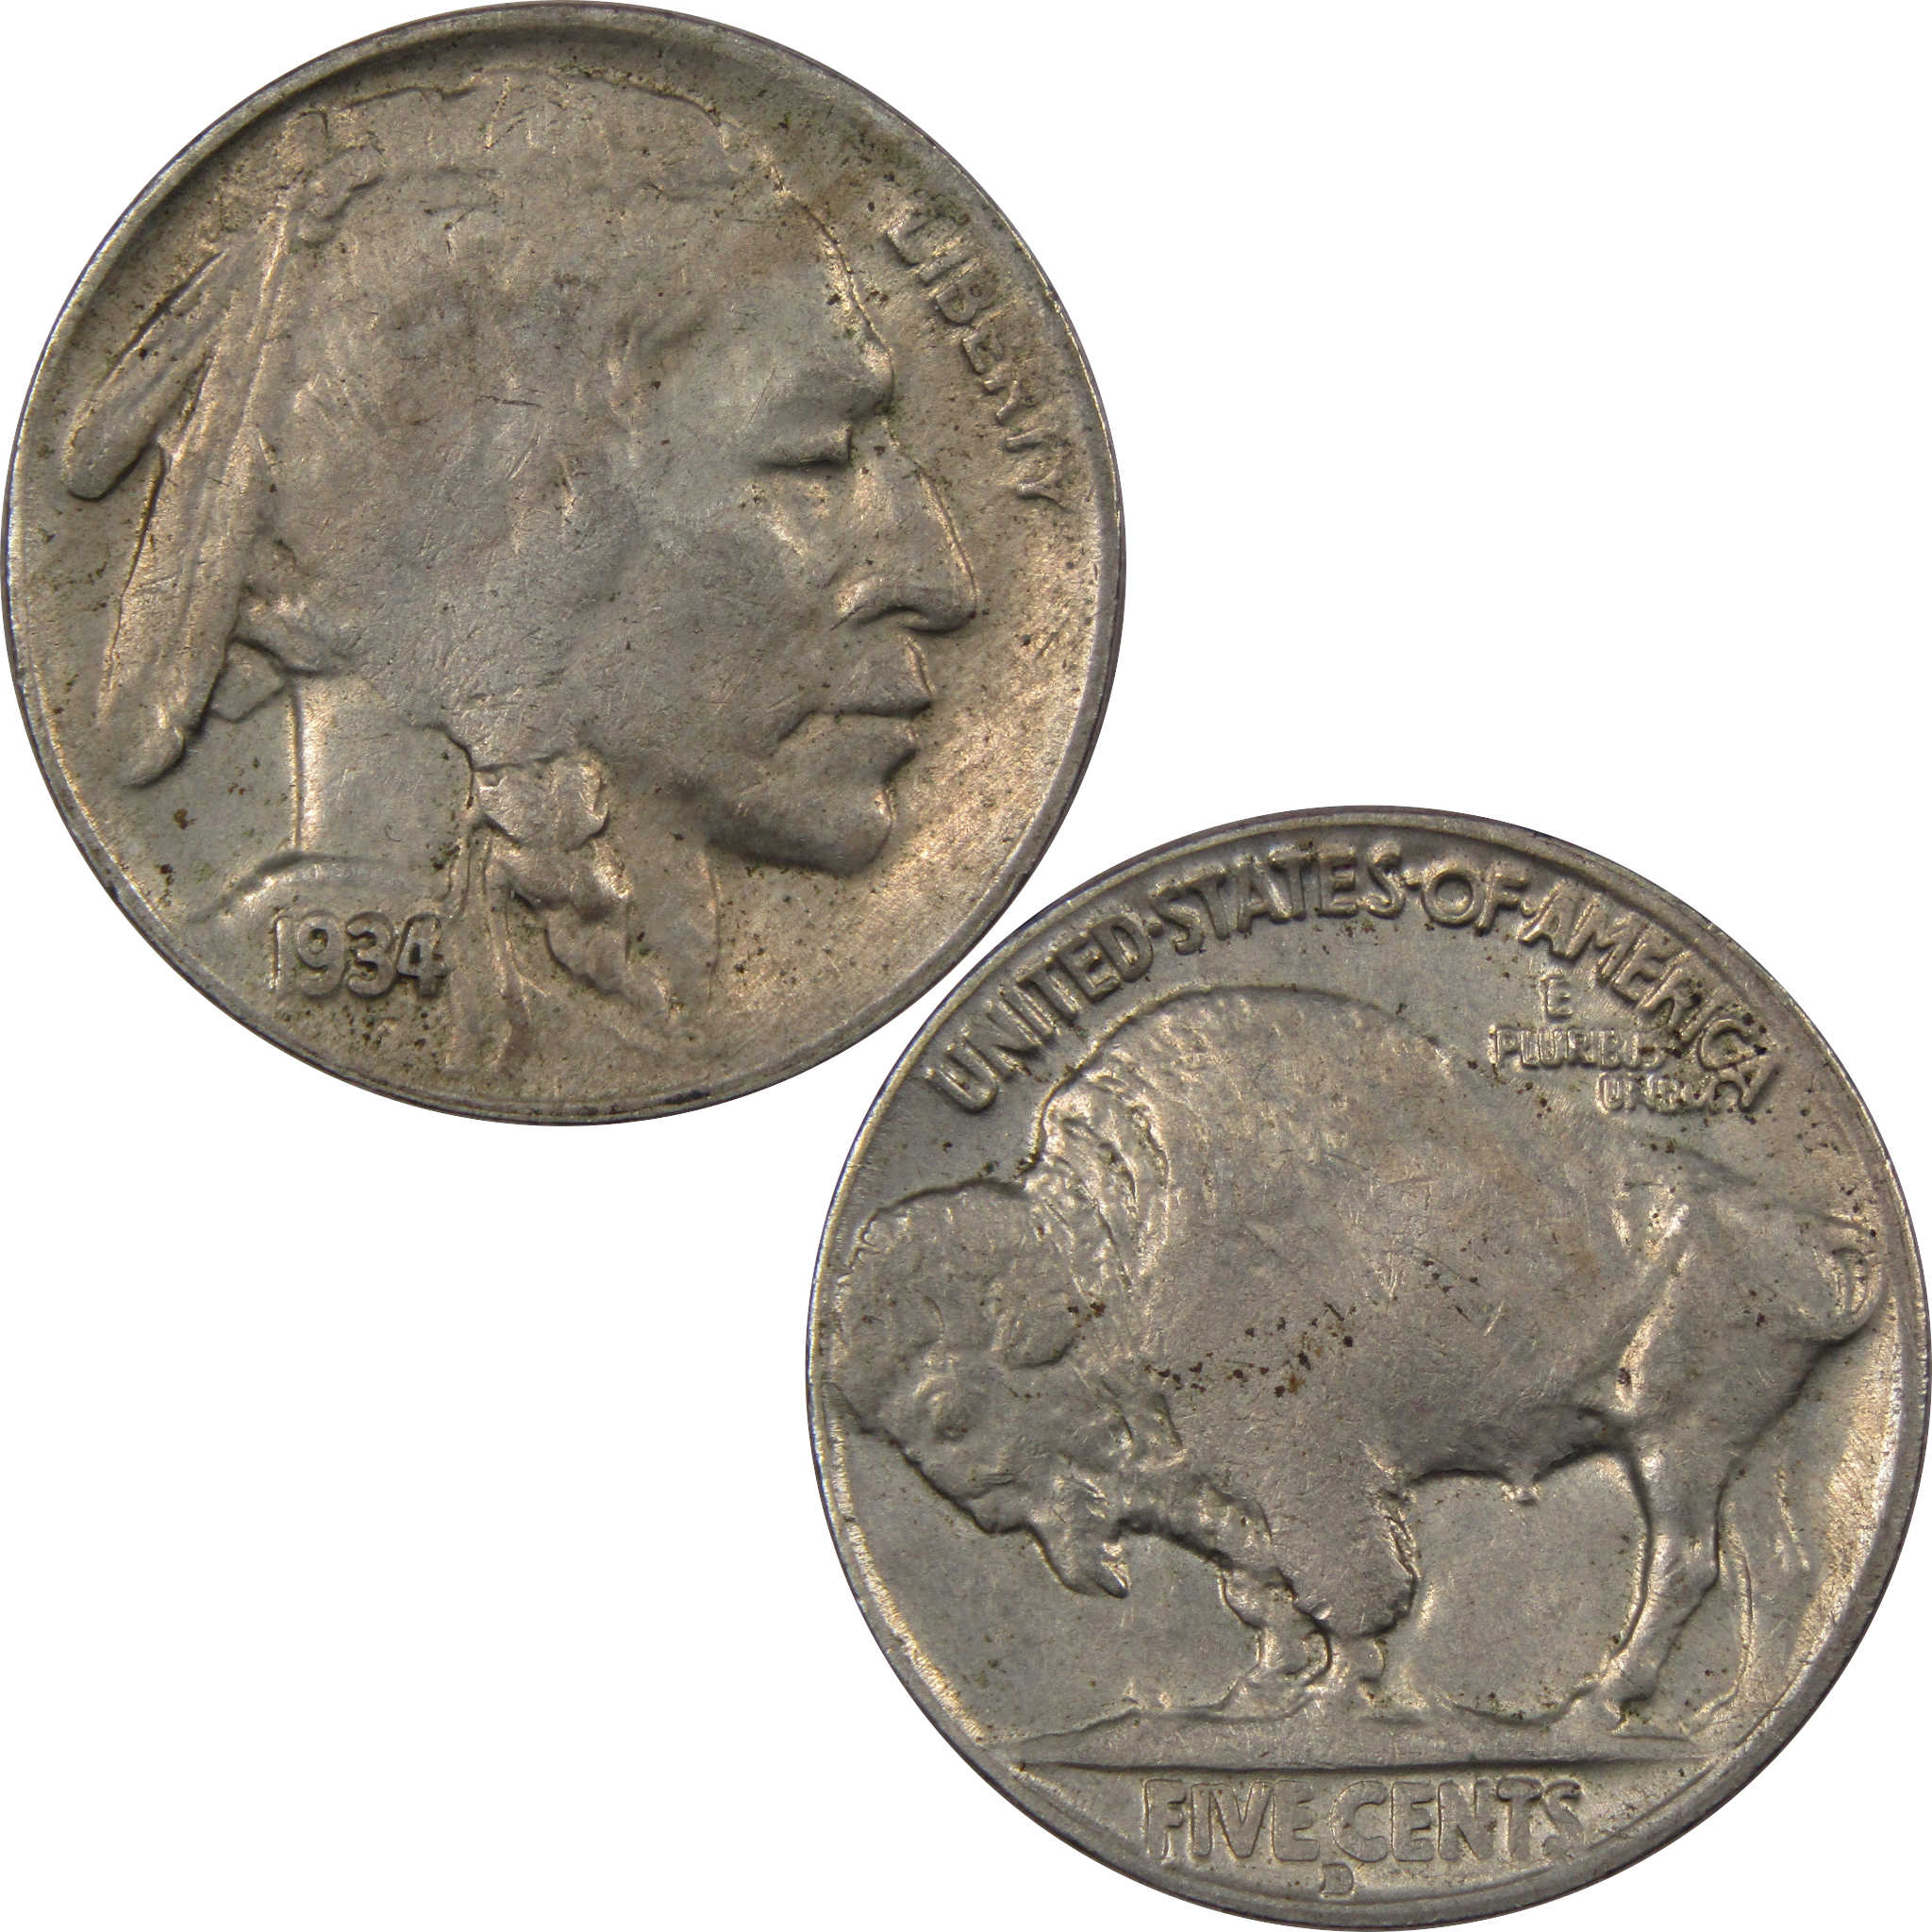 Uncirculated Buffalo Nickels  Coins, Old coins worth money, Buffalo nickel